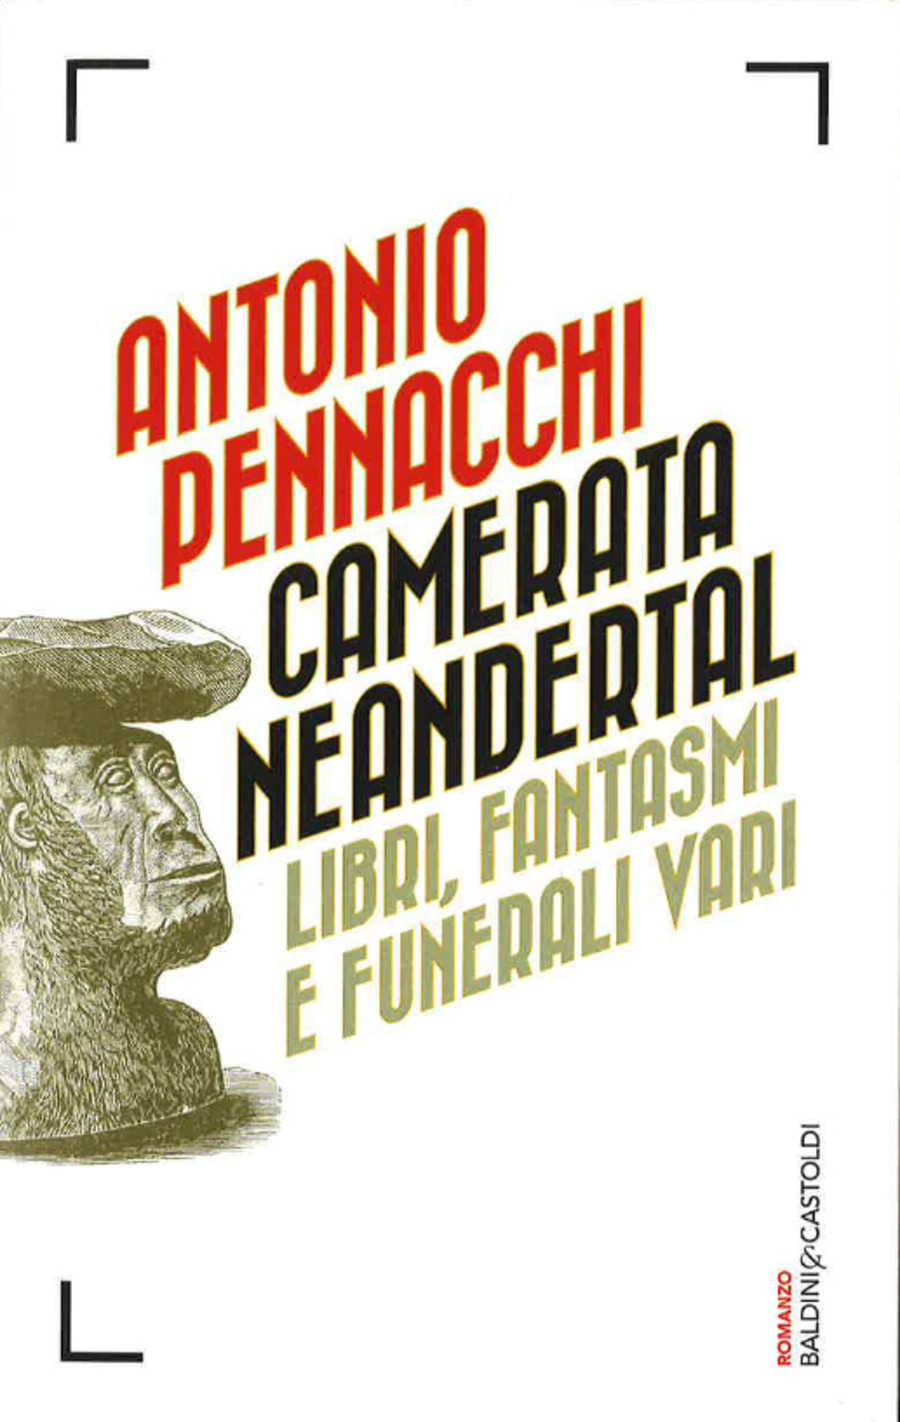 Camerata Neandertal. Libri, fantasmi e funerali vari